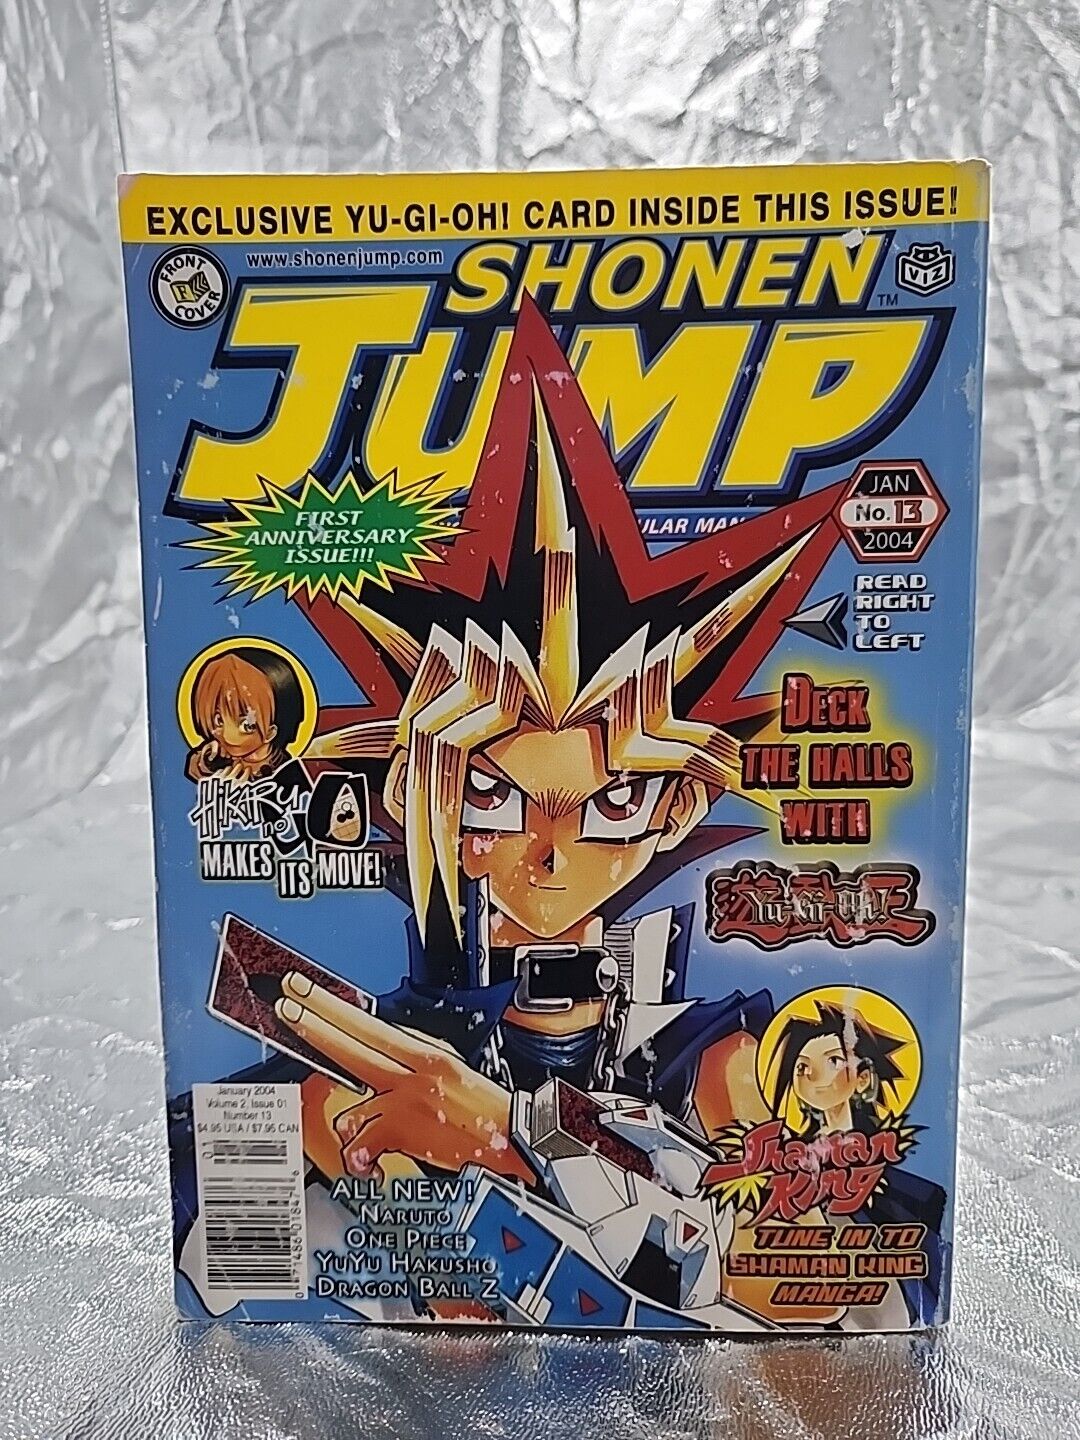 January 2004 Shonen Jump - English Version NO CARD INCLUDED